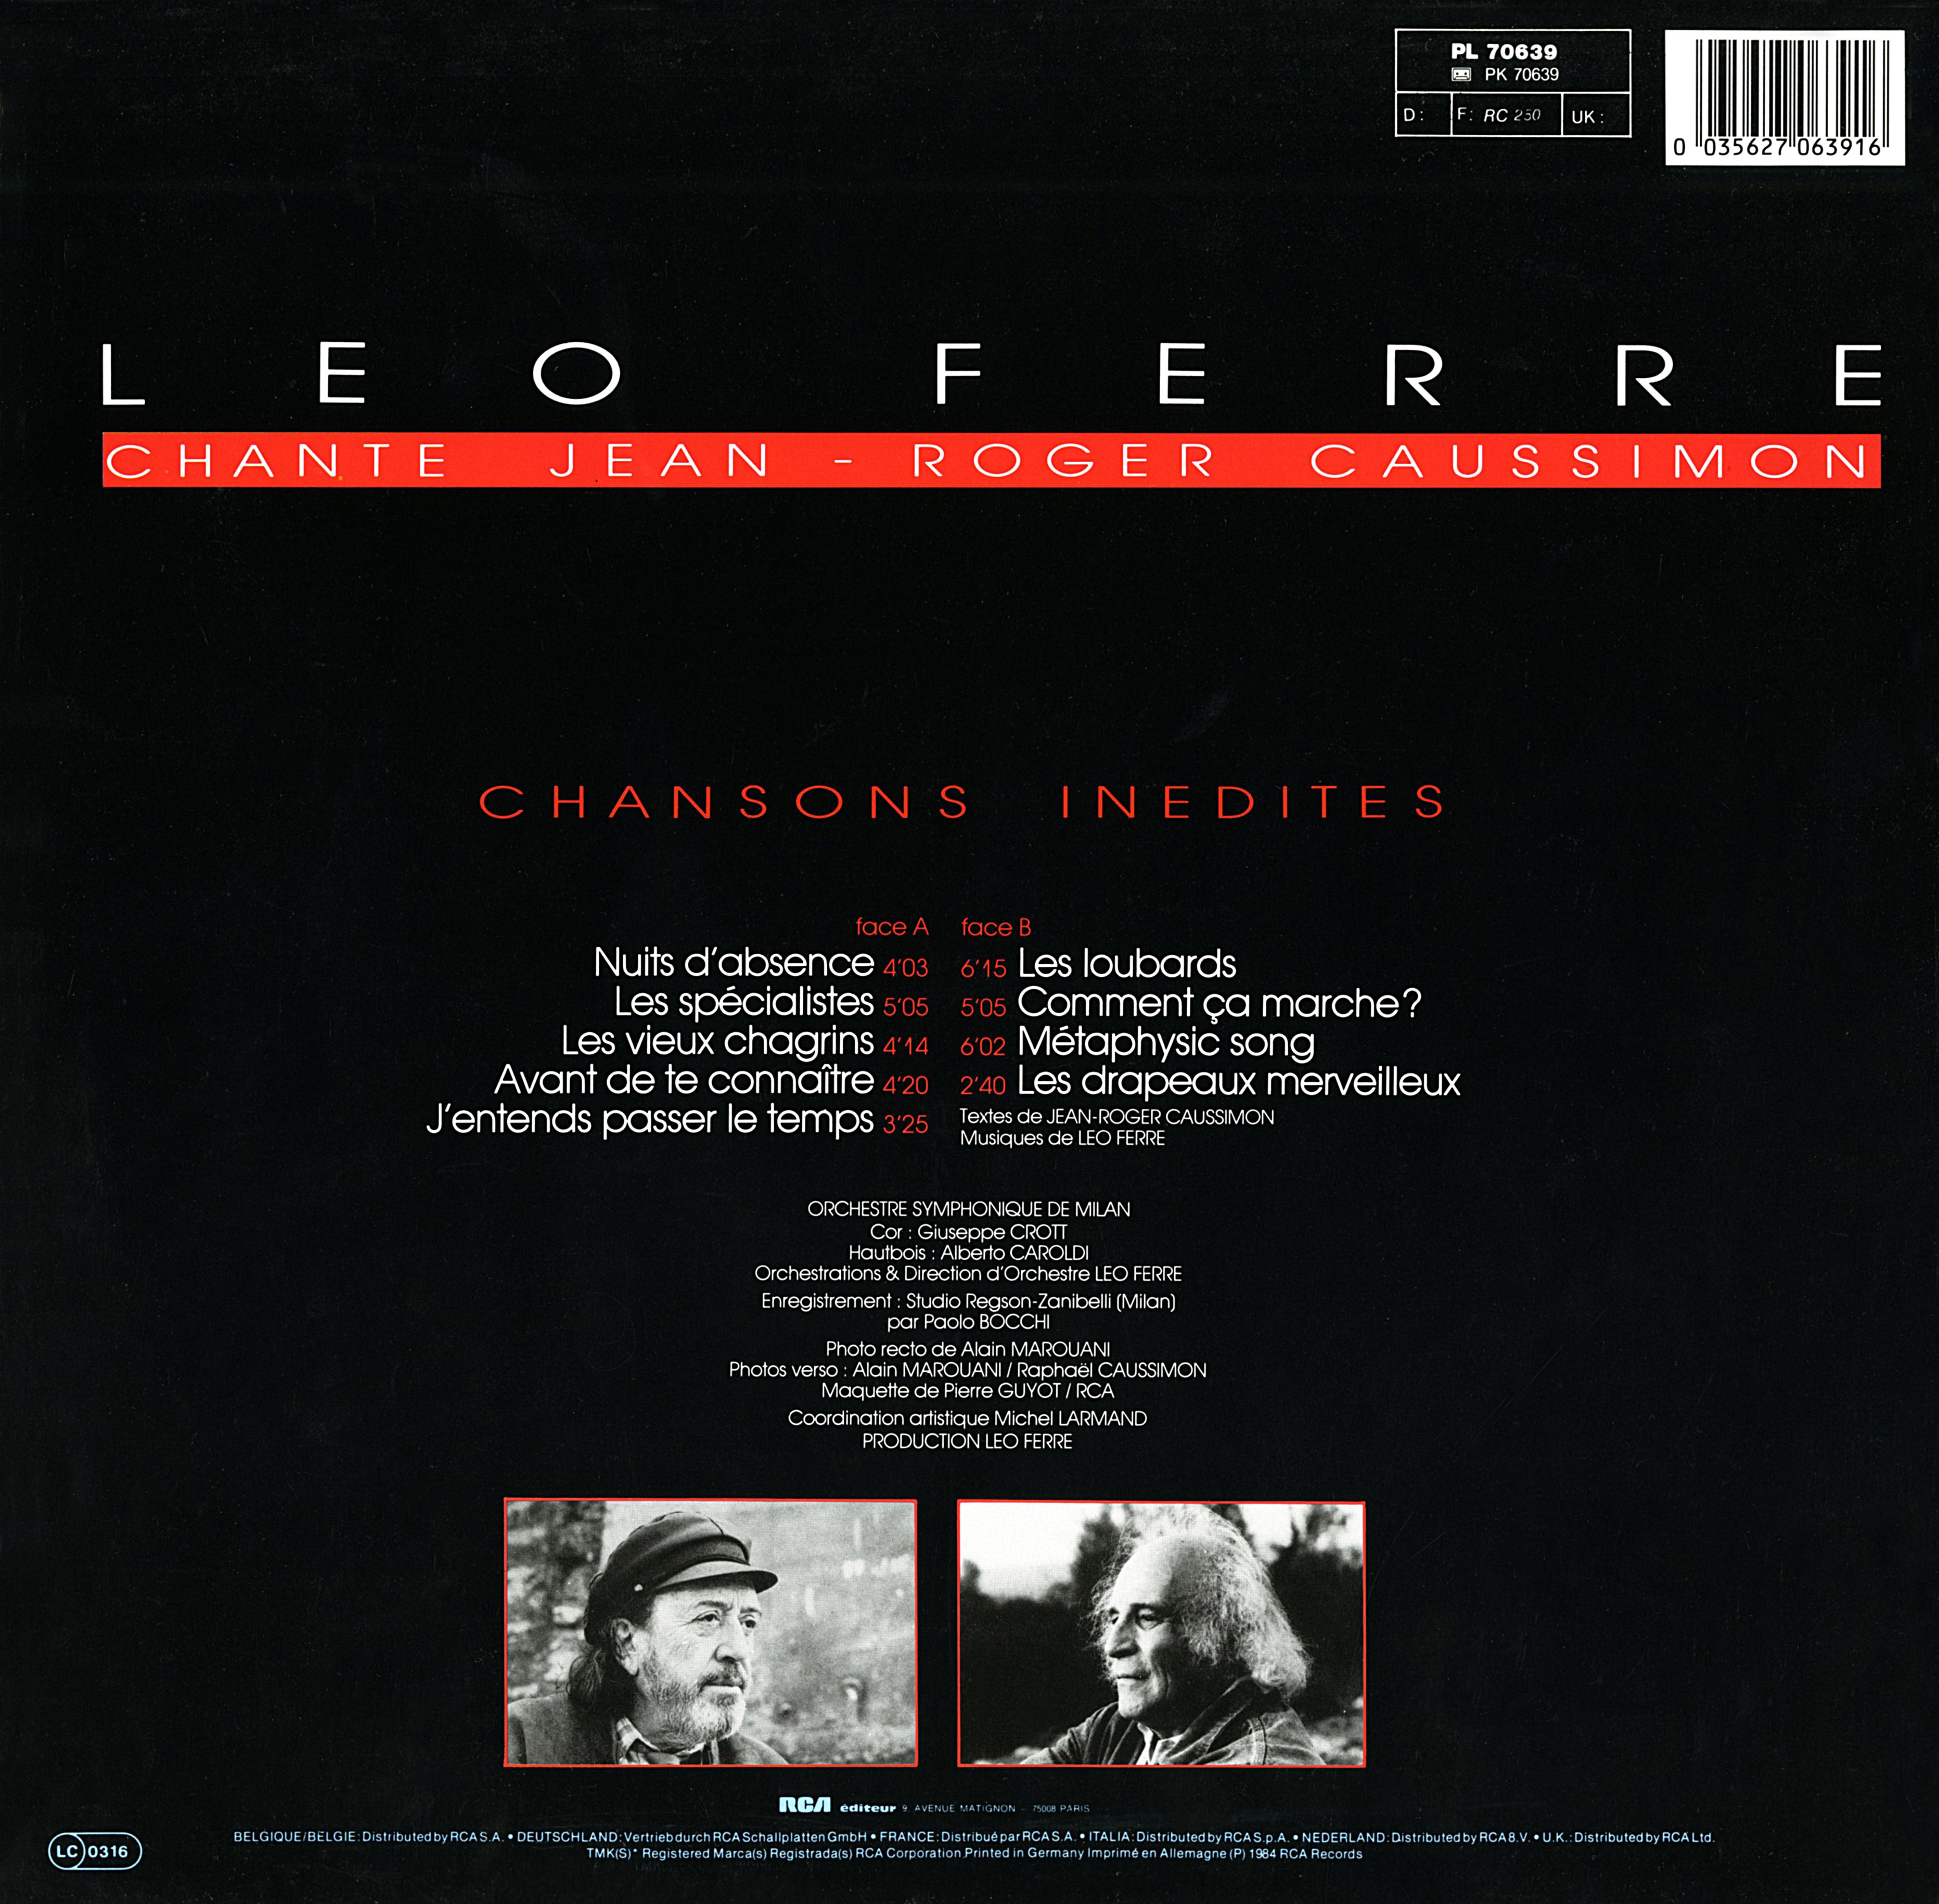 Léo Ferré - Les loubards, RCA PL 70639